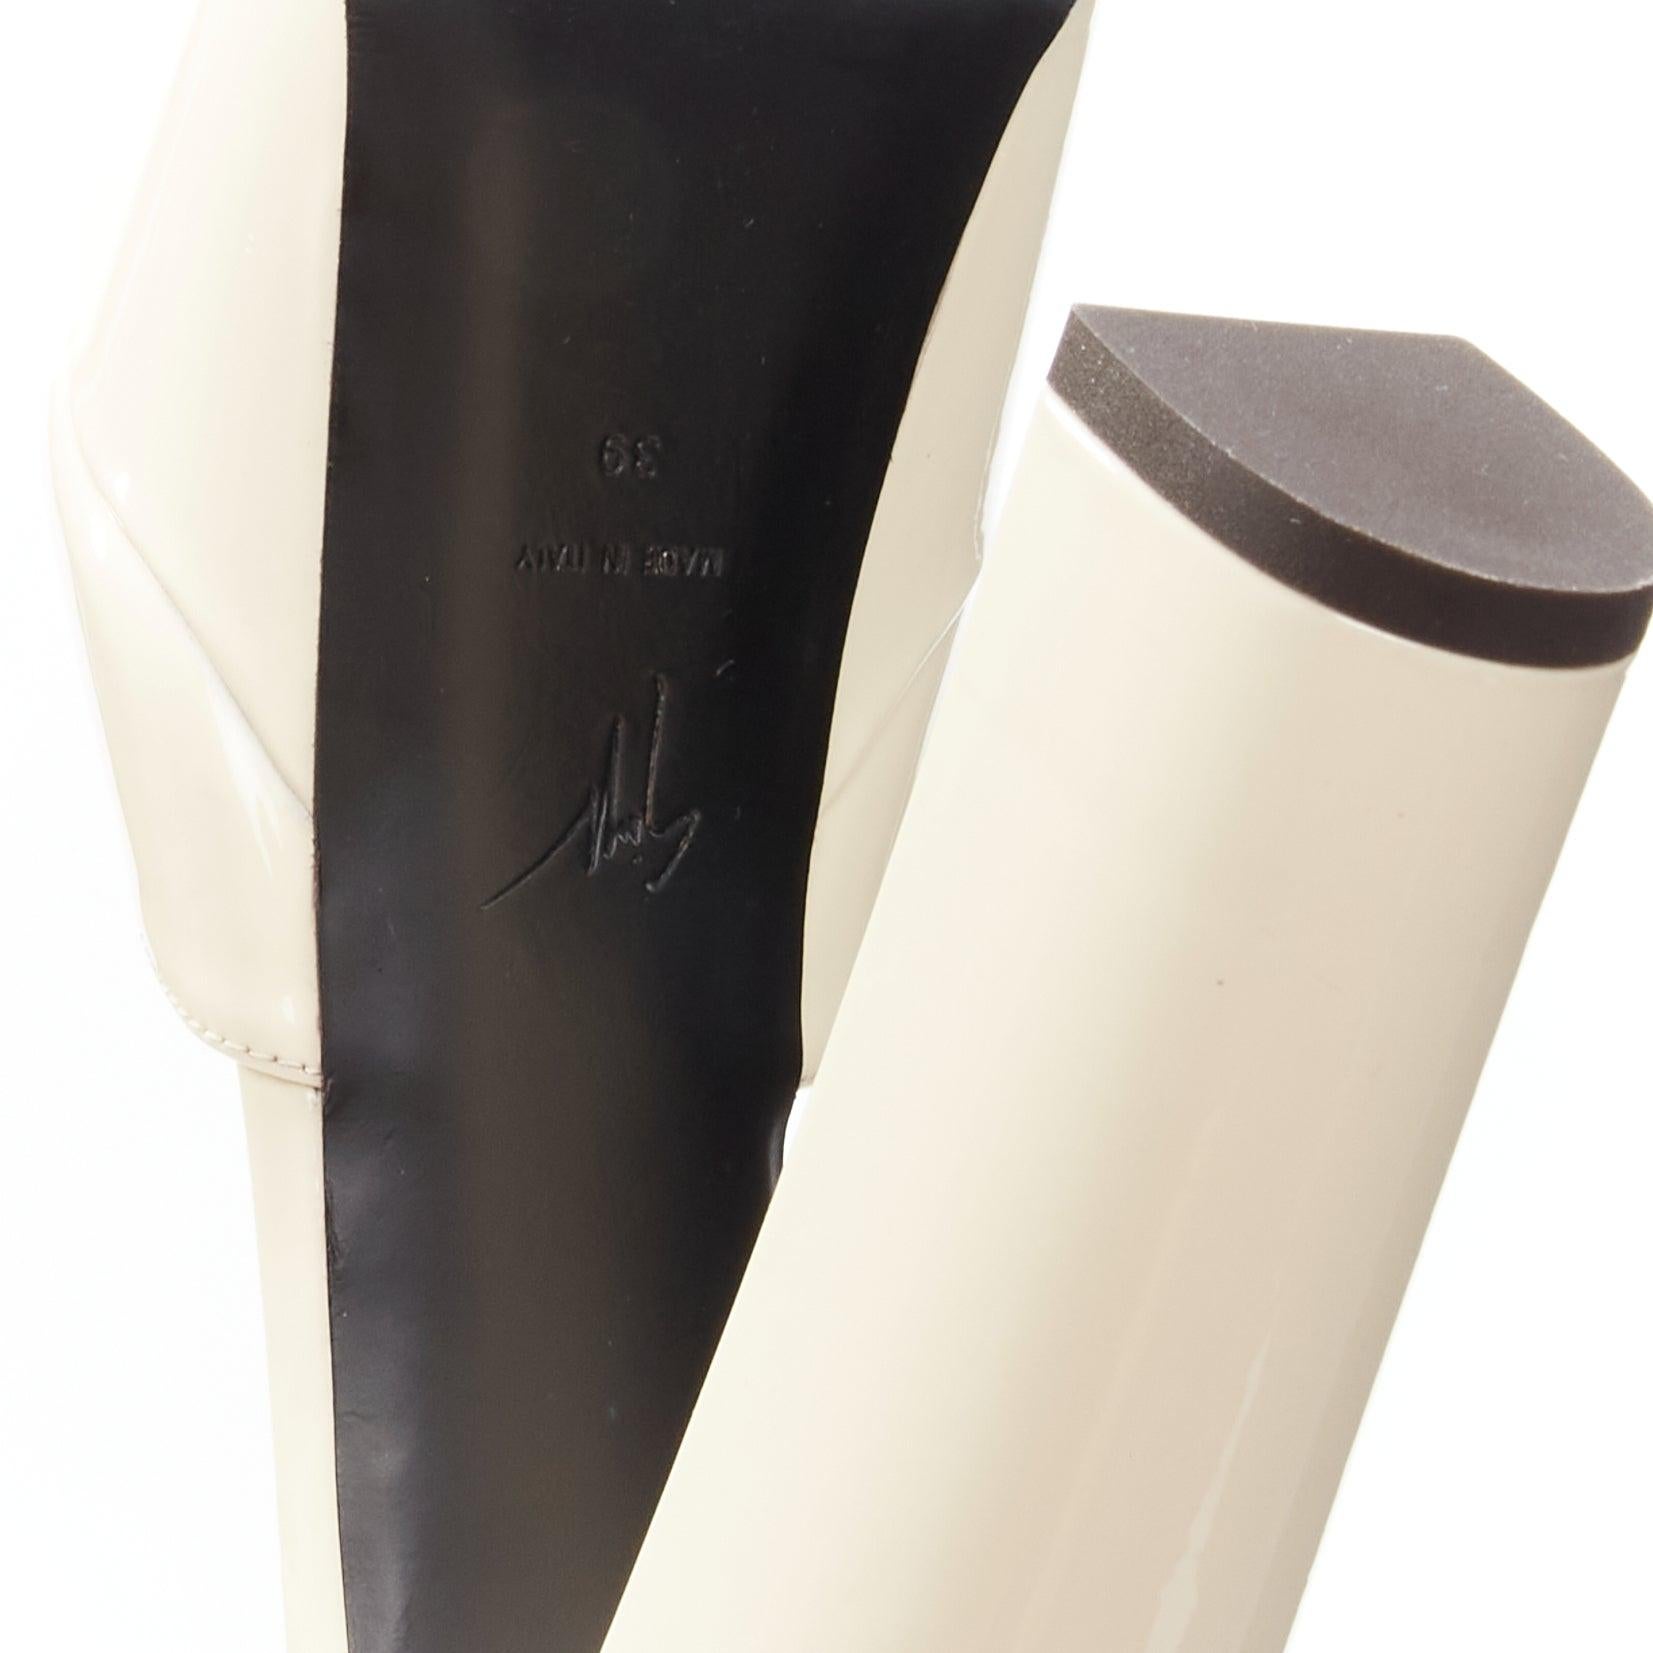 GIUSEPPE ZANOTTI Bebe cream patent leather platform heels EU39 5